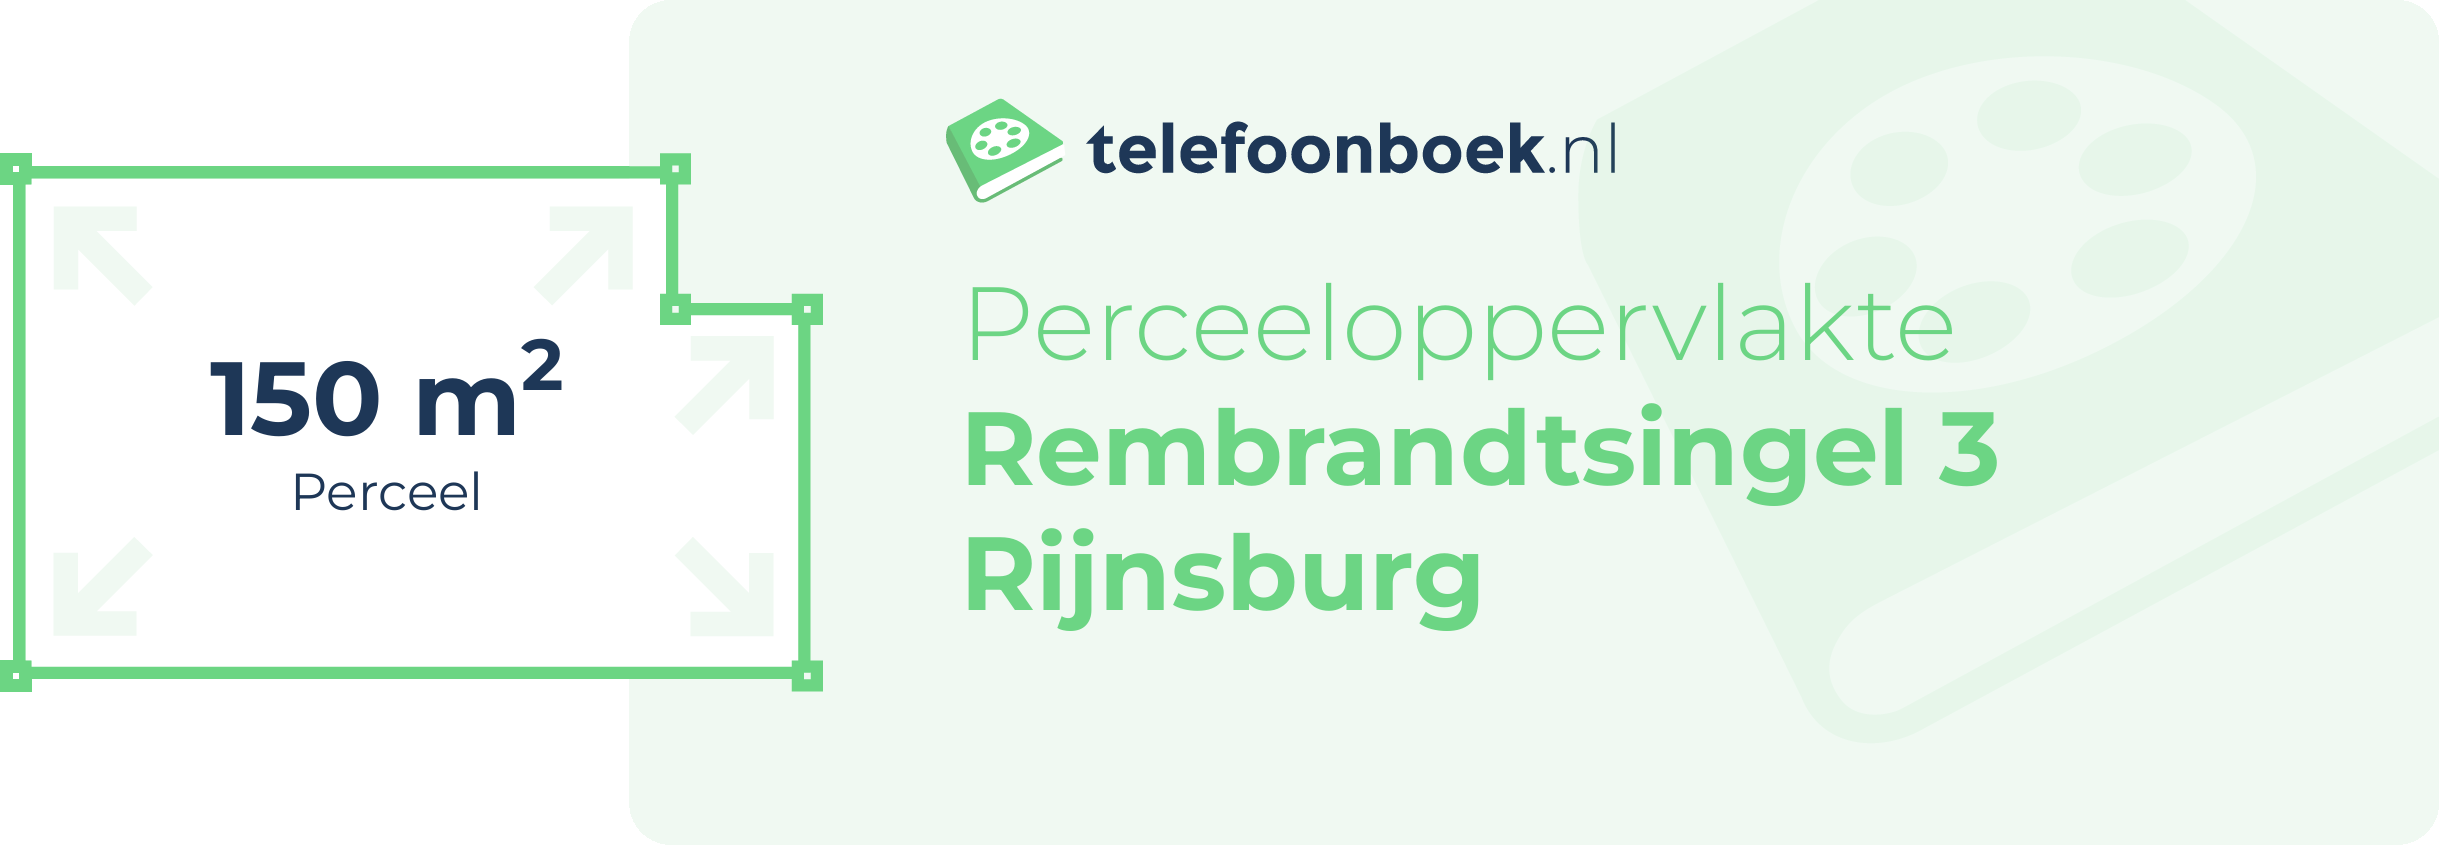 Perceeloppervlakte Rembrandtsingel 3 Rijnsburg